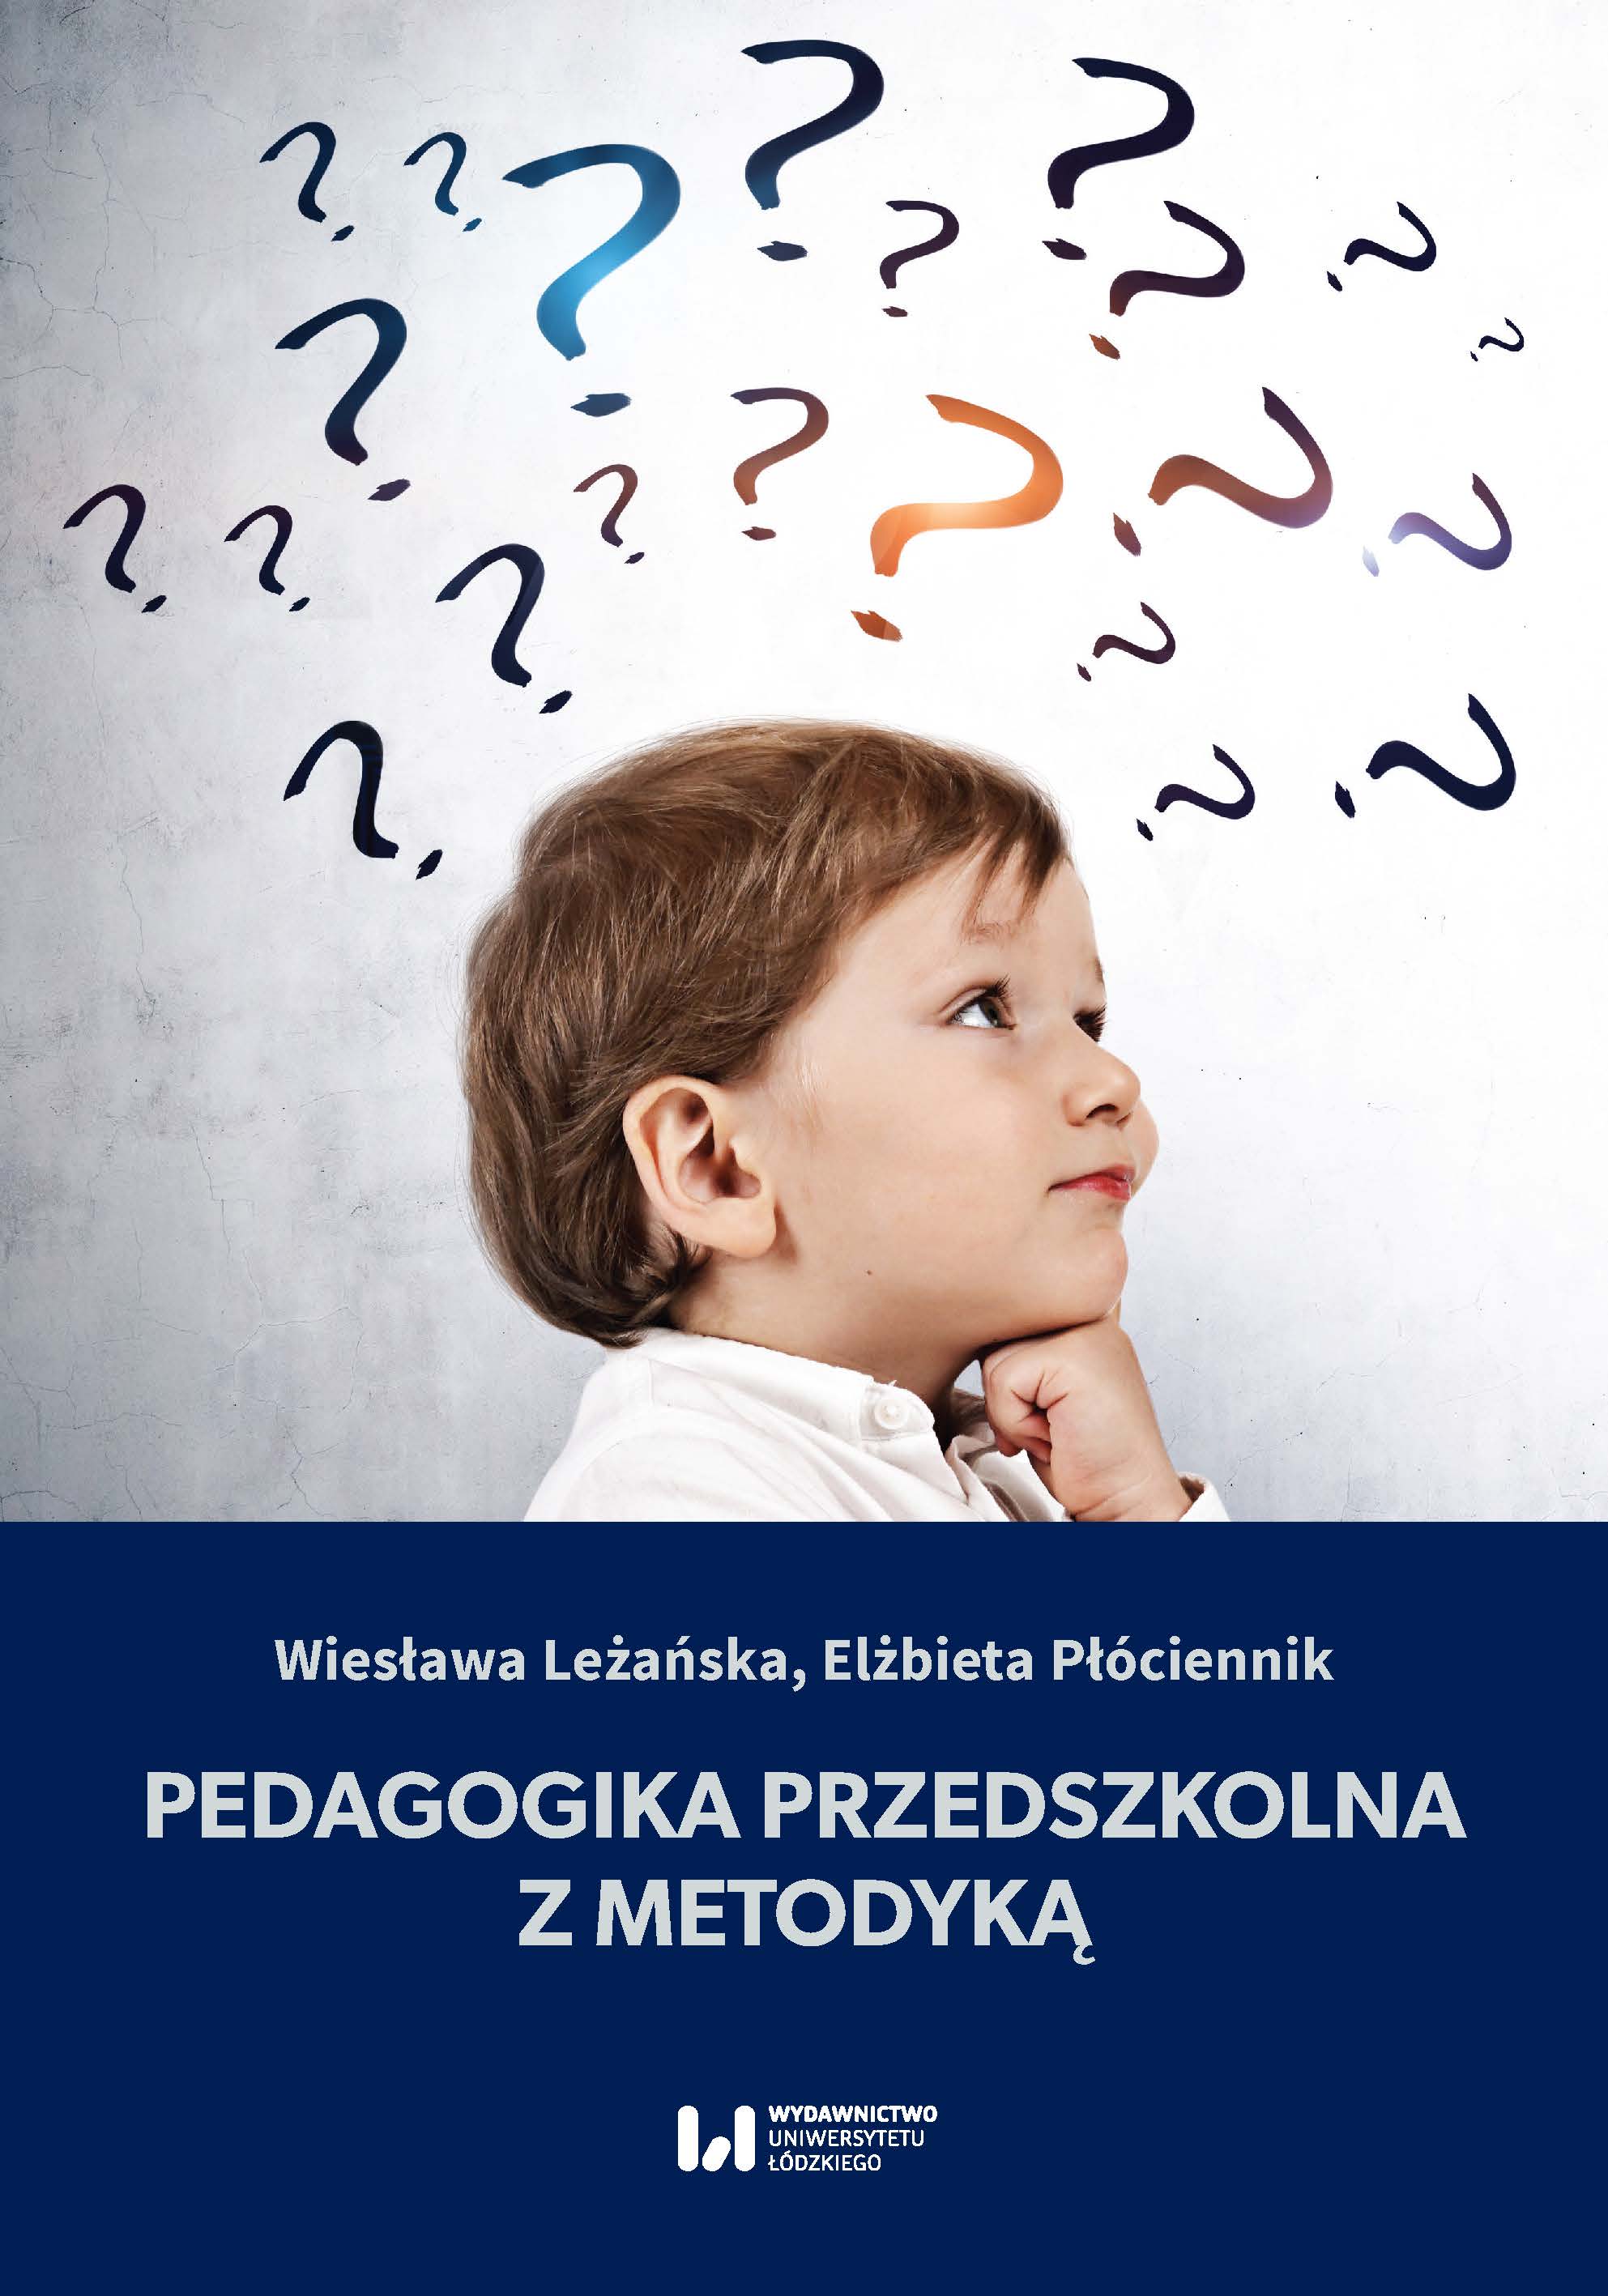 Pre-School Pedagogy with Methodology